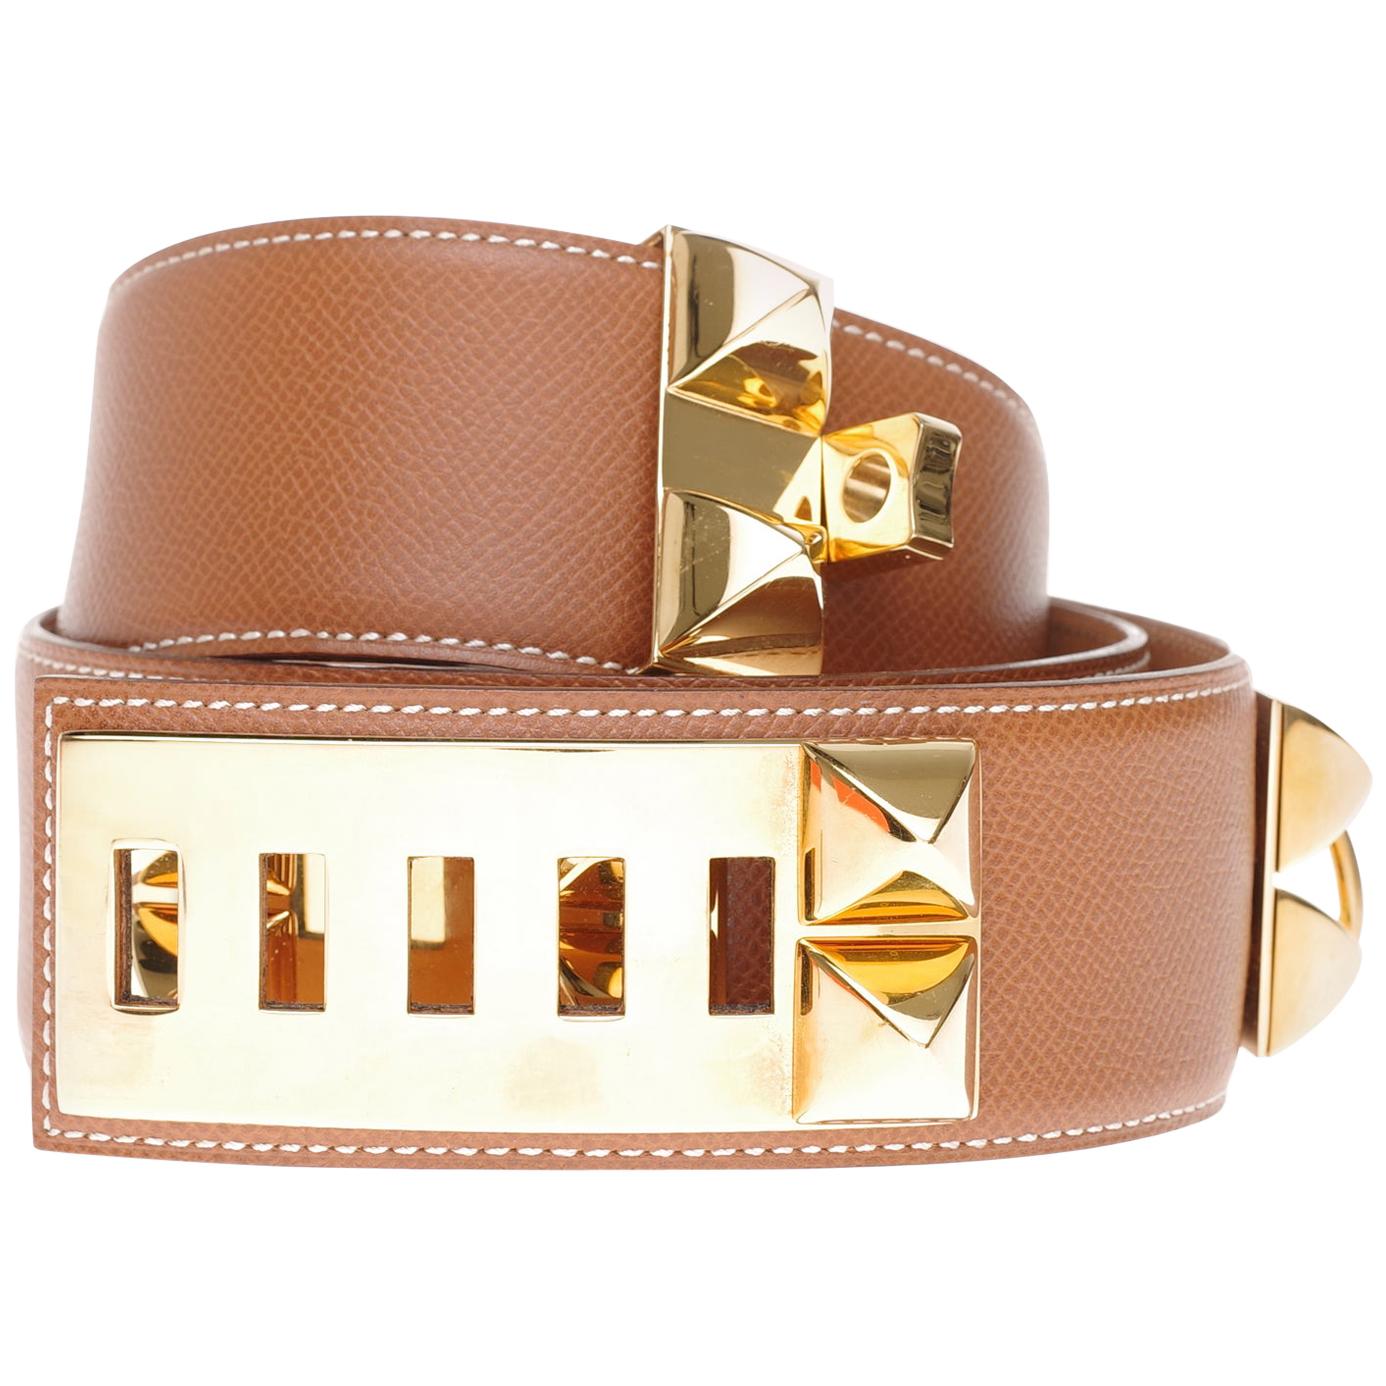 Chic Hermès belt "Collier de chien" Médor in gold epsom leather, gold hardware